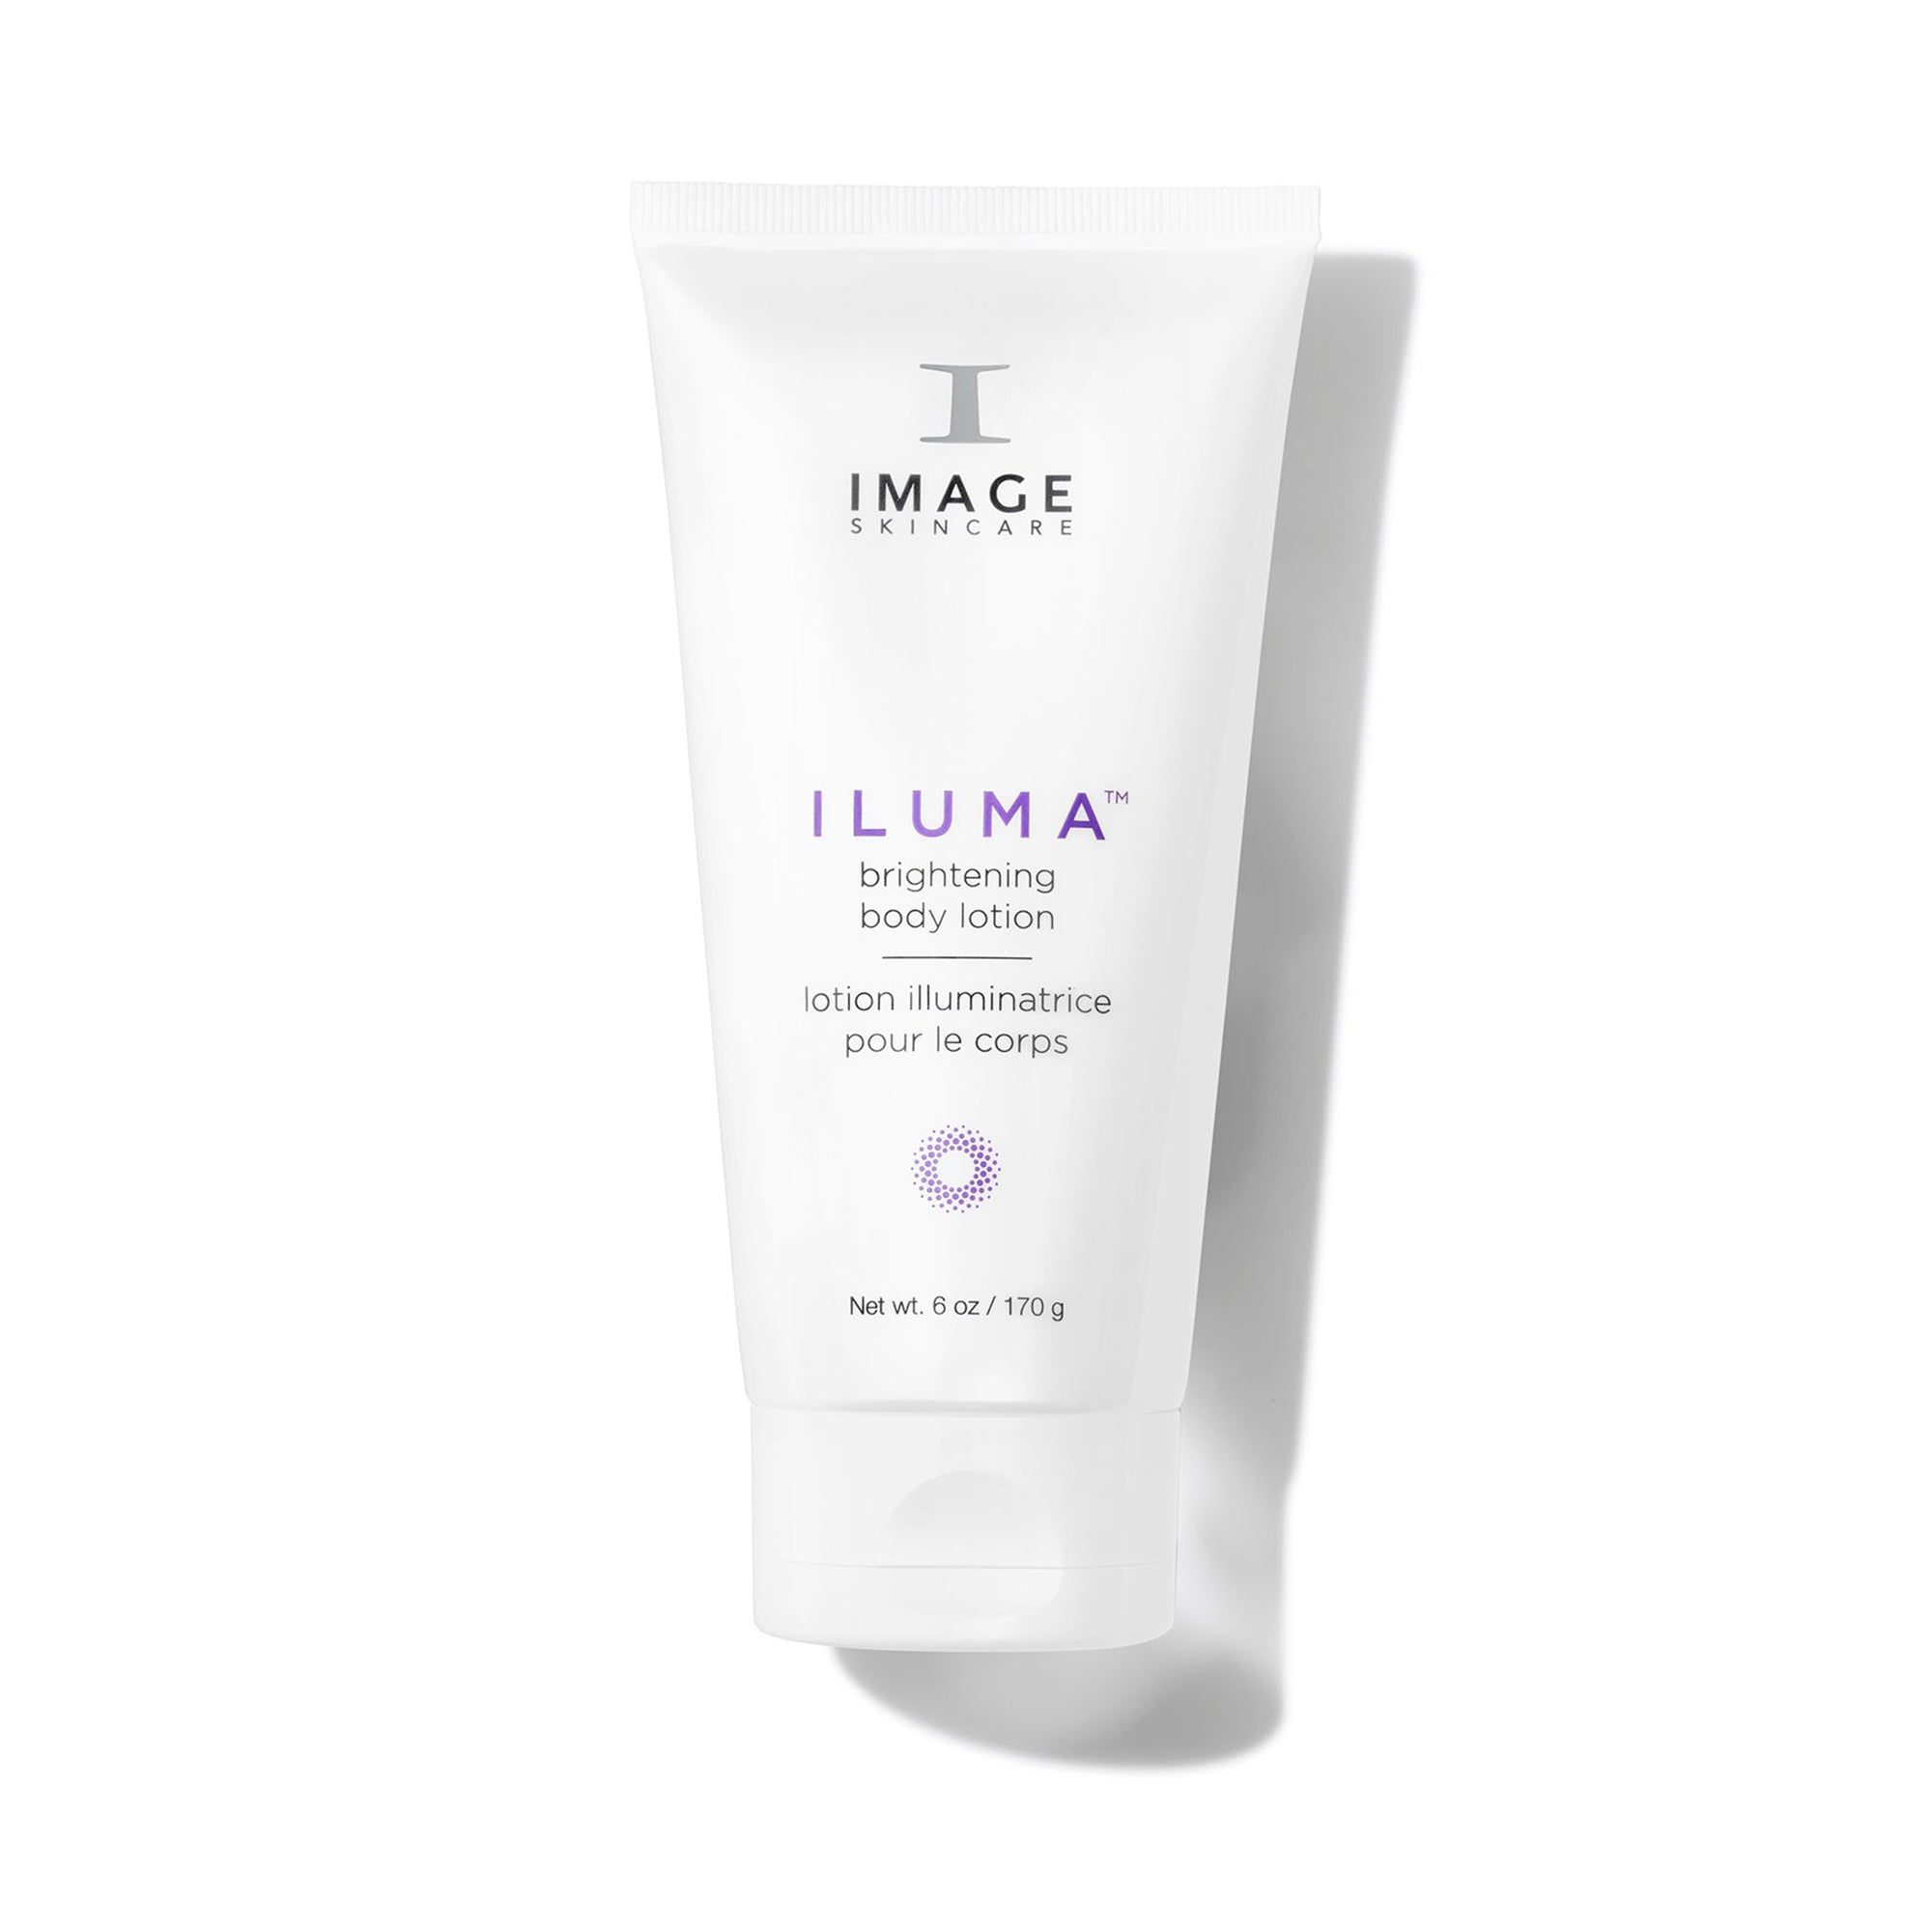 Image Skincare Iluma Intense Body Lotion / 6OZ